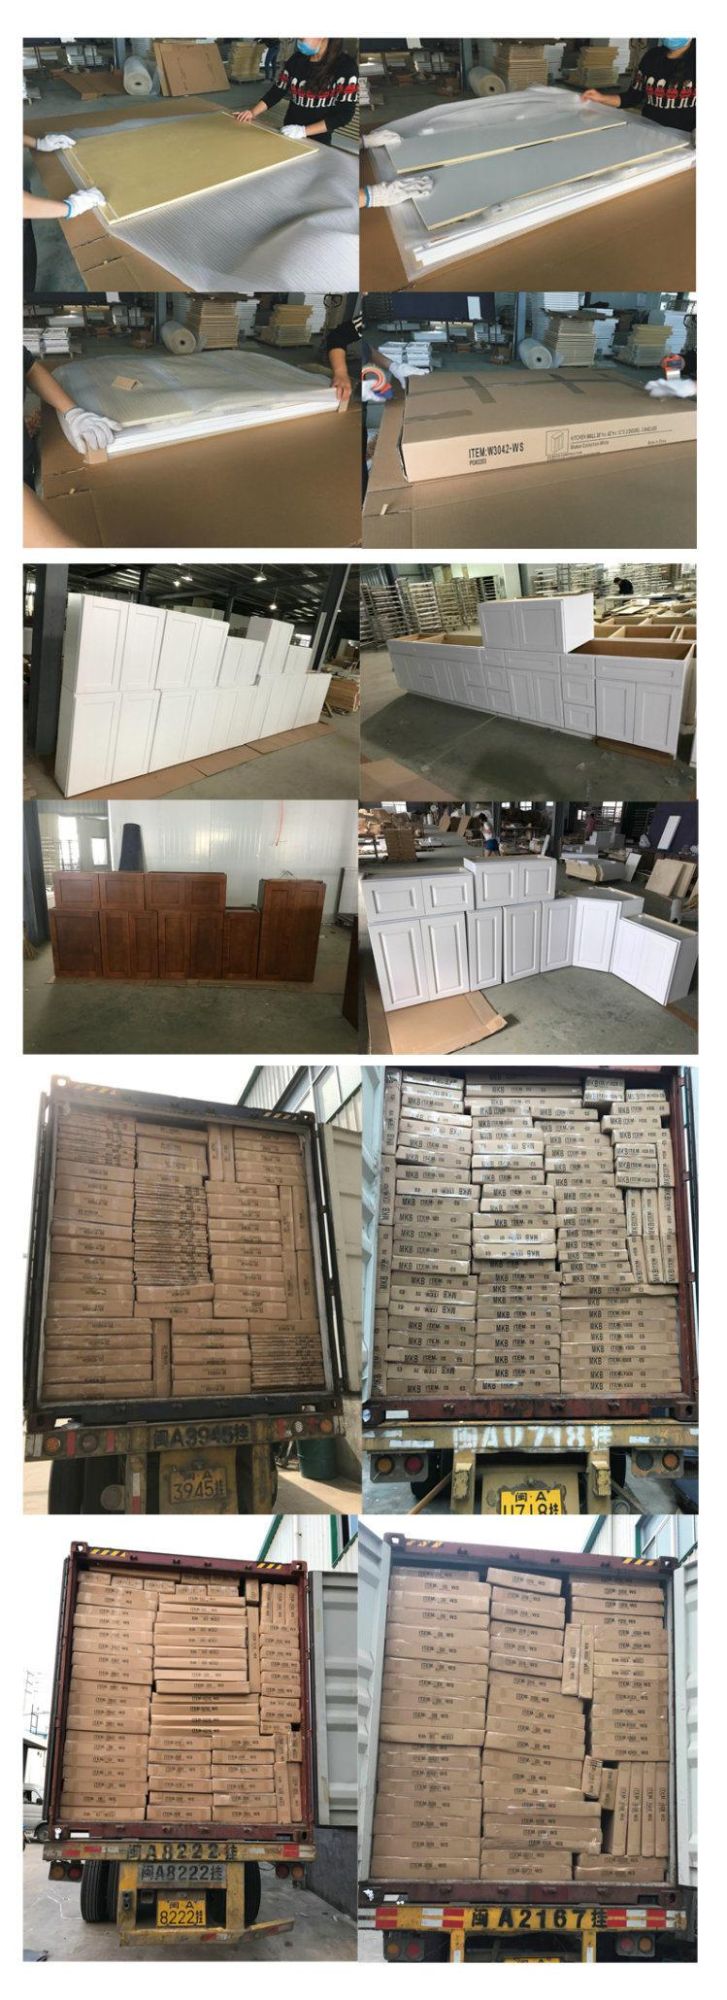 Customized Modern Modular Solid Wood Kitchen Cabinet Gray